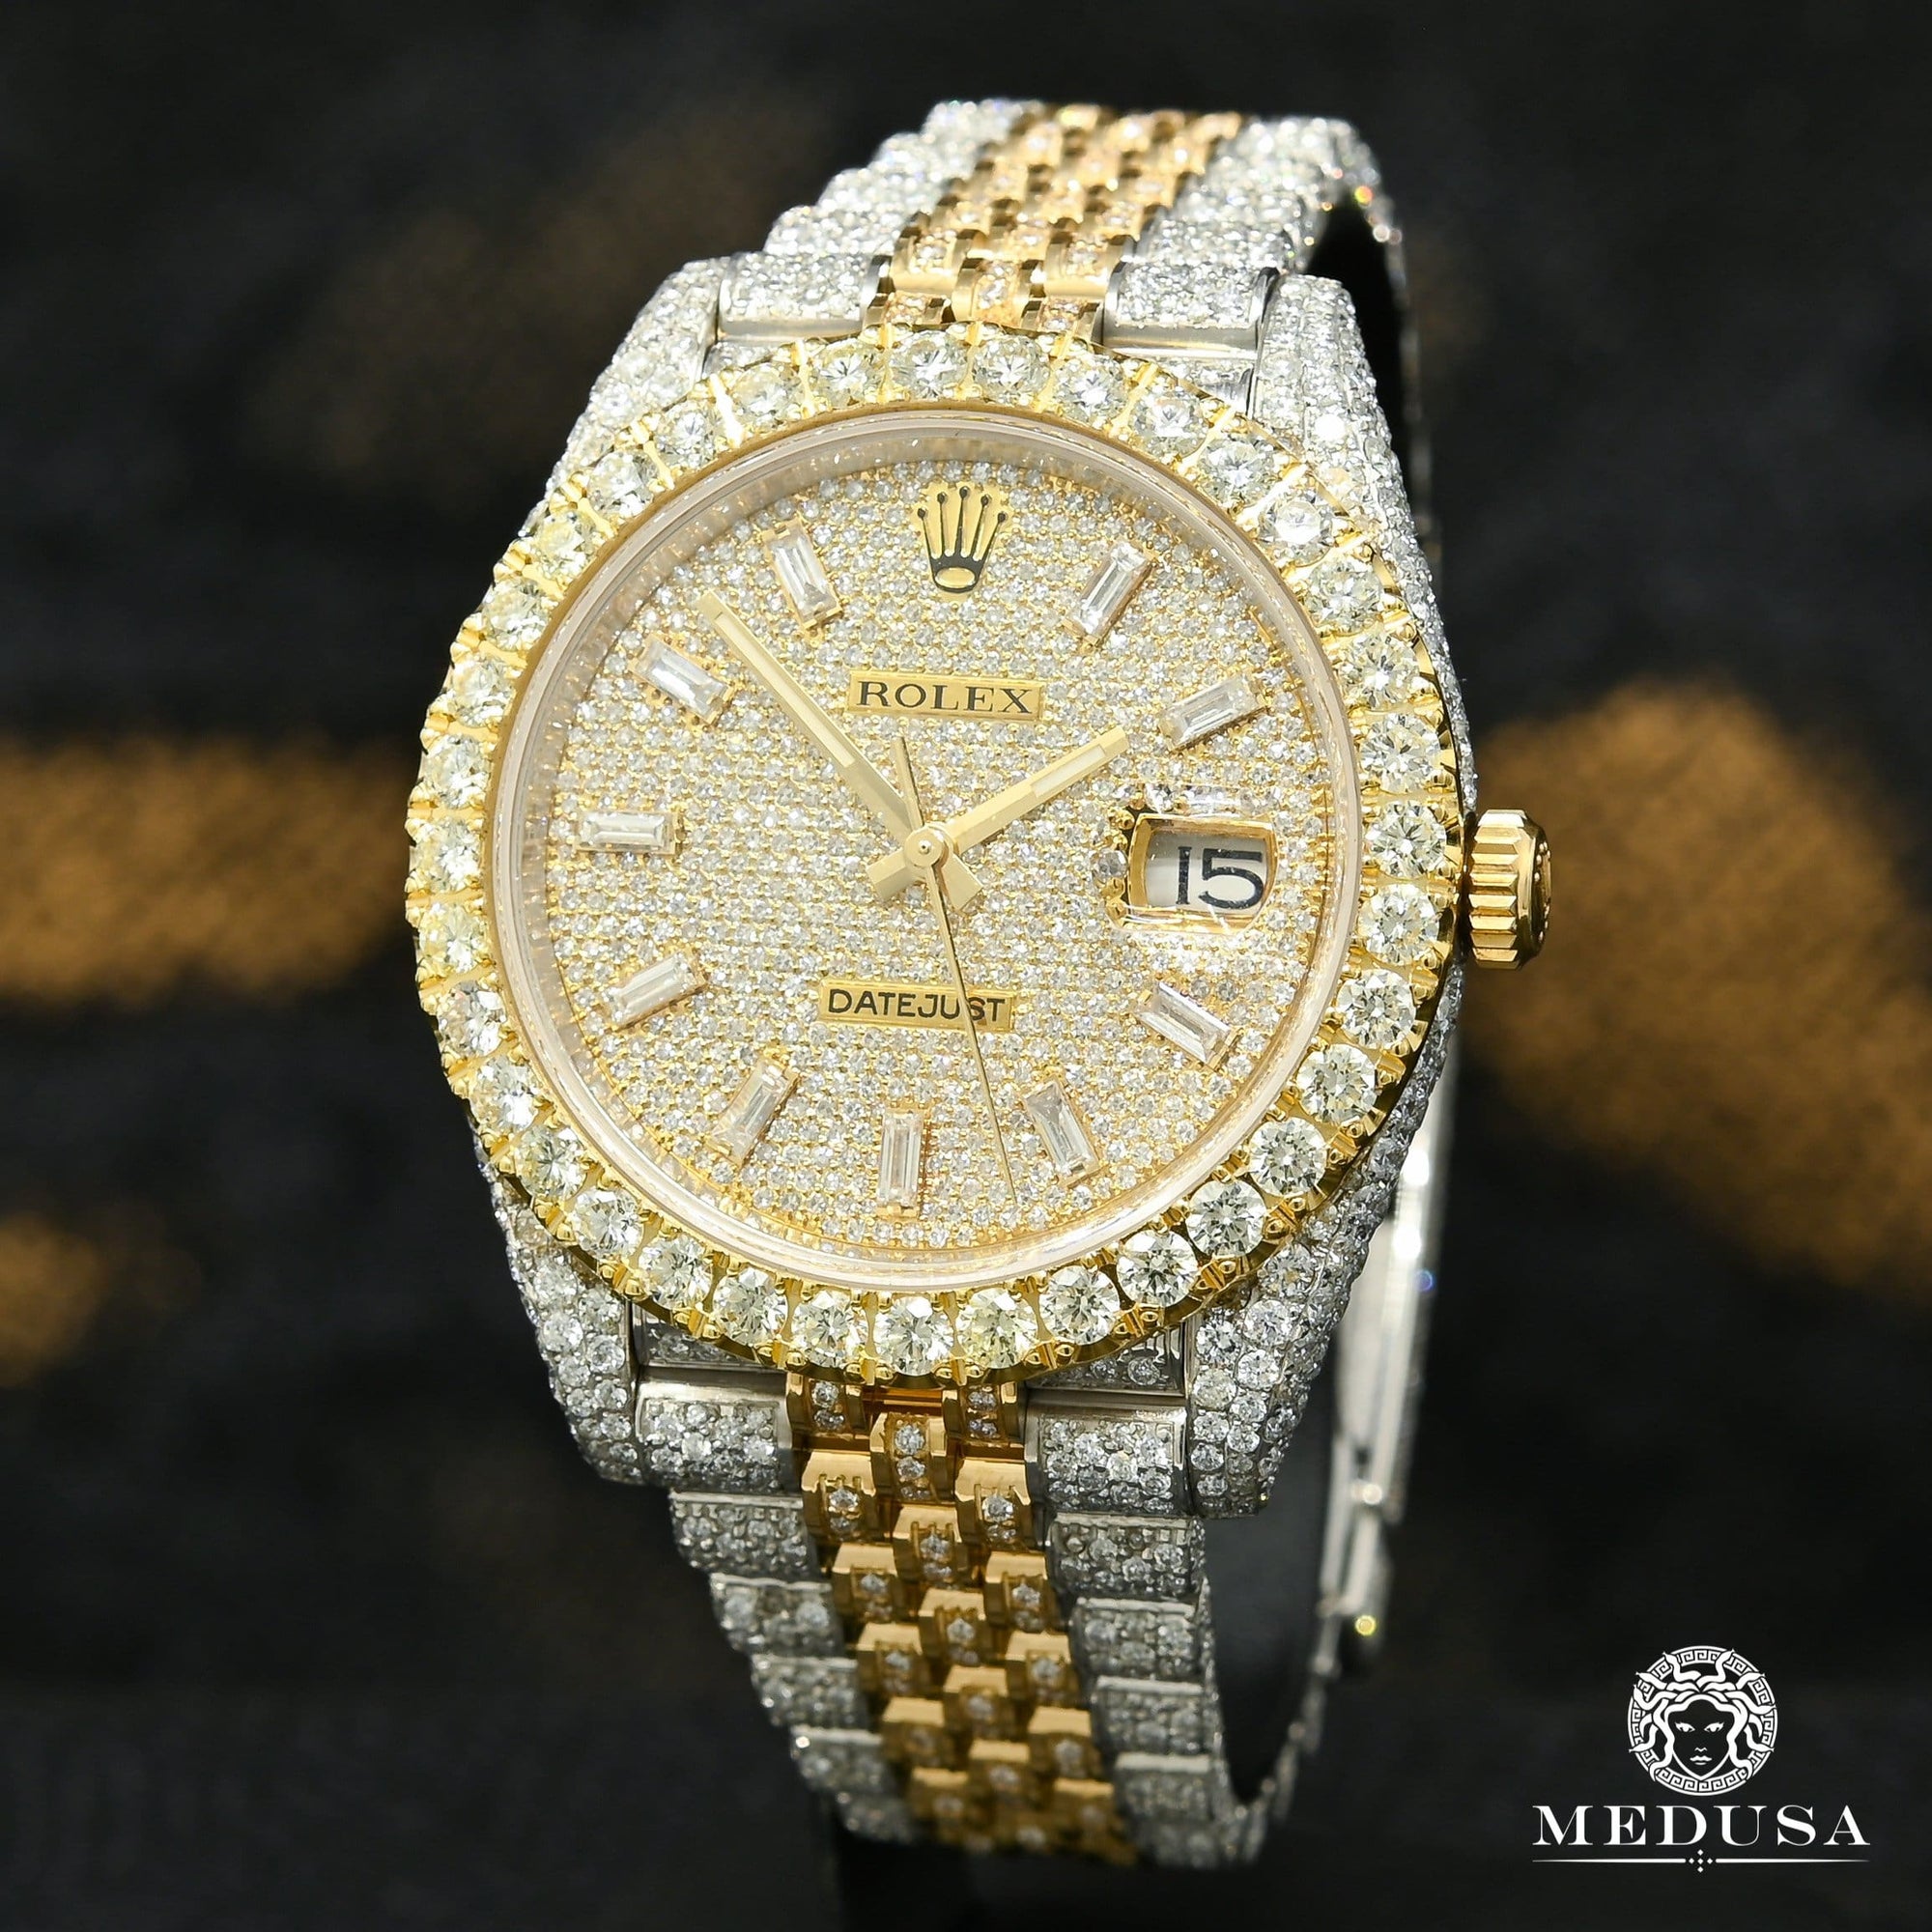 Rolex watch | Rolex Datejust Men's Watch 41mm - 2 Tones Full Honeycomb Baguette Gold 2 Tones